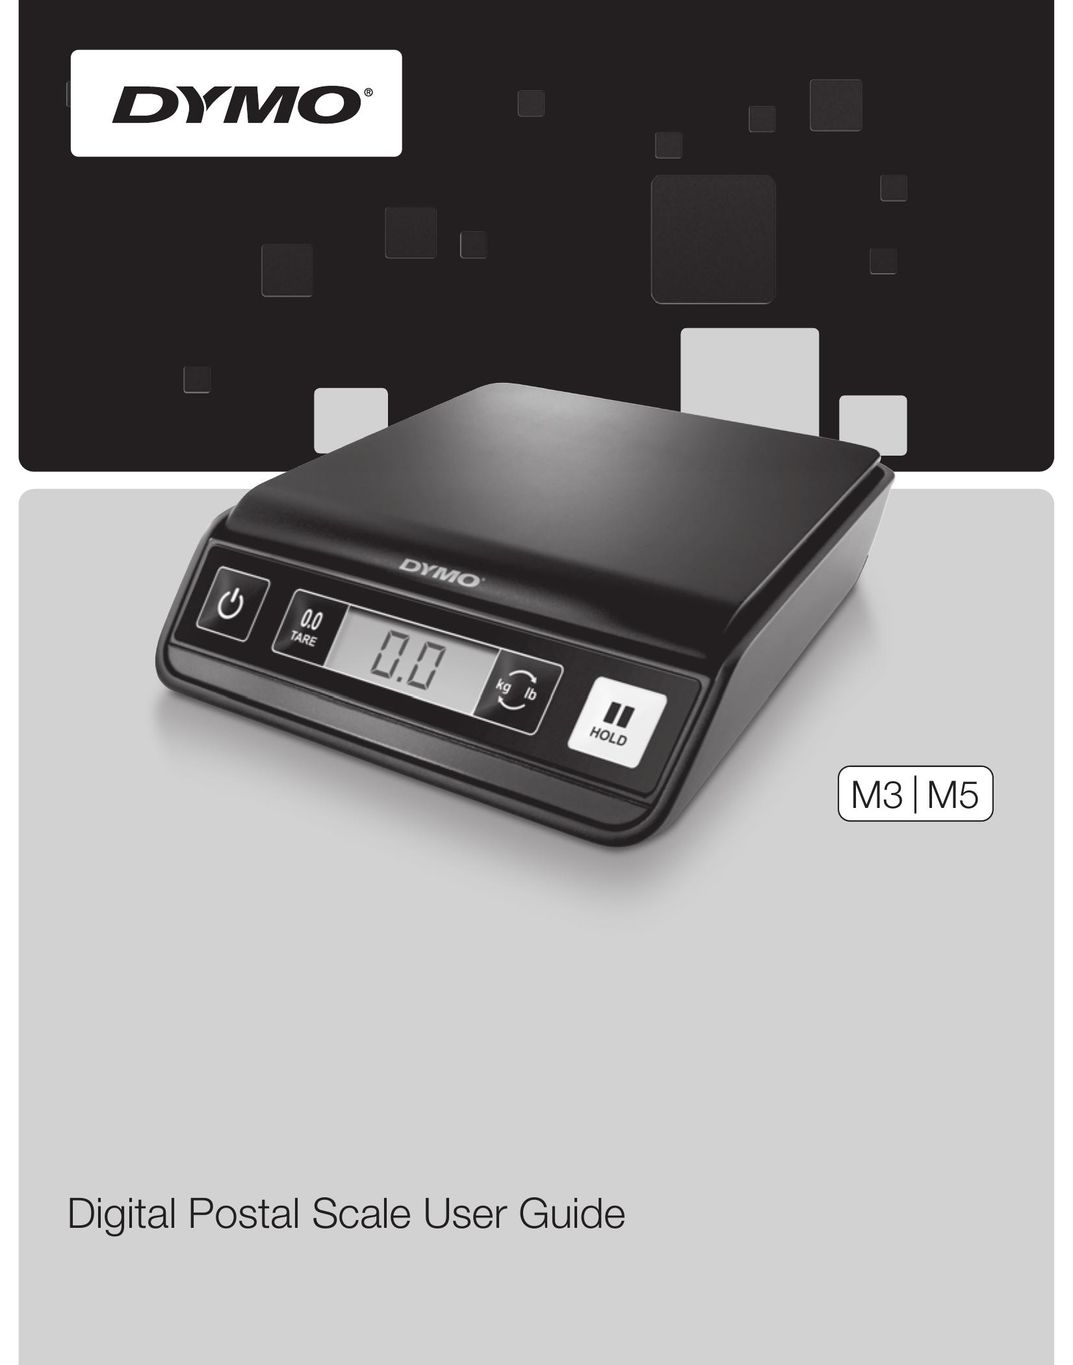 Dymo M5 Postal Equipment User Manual